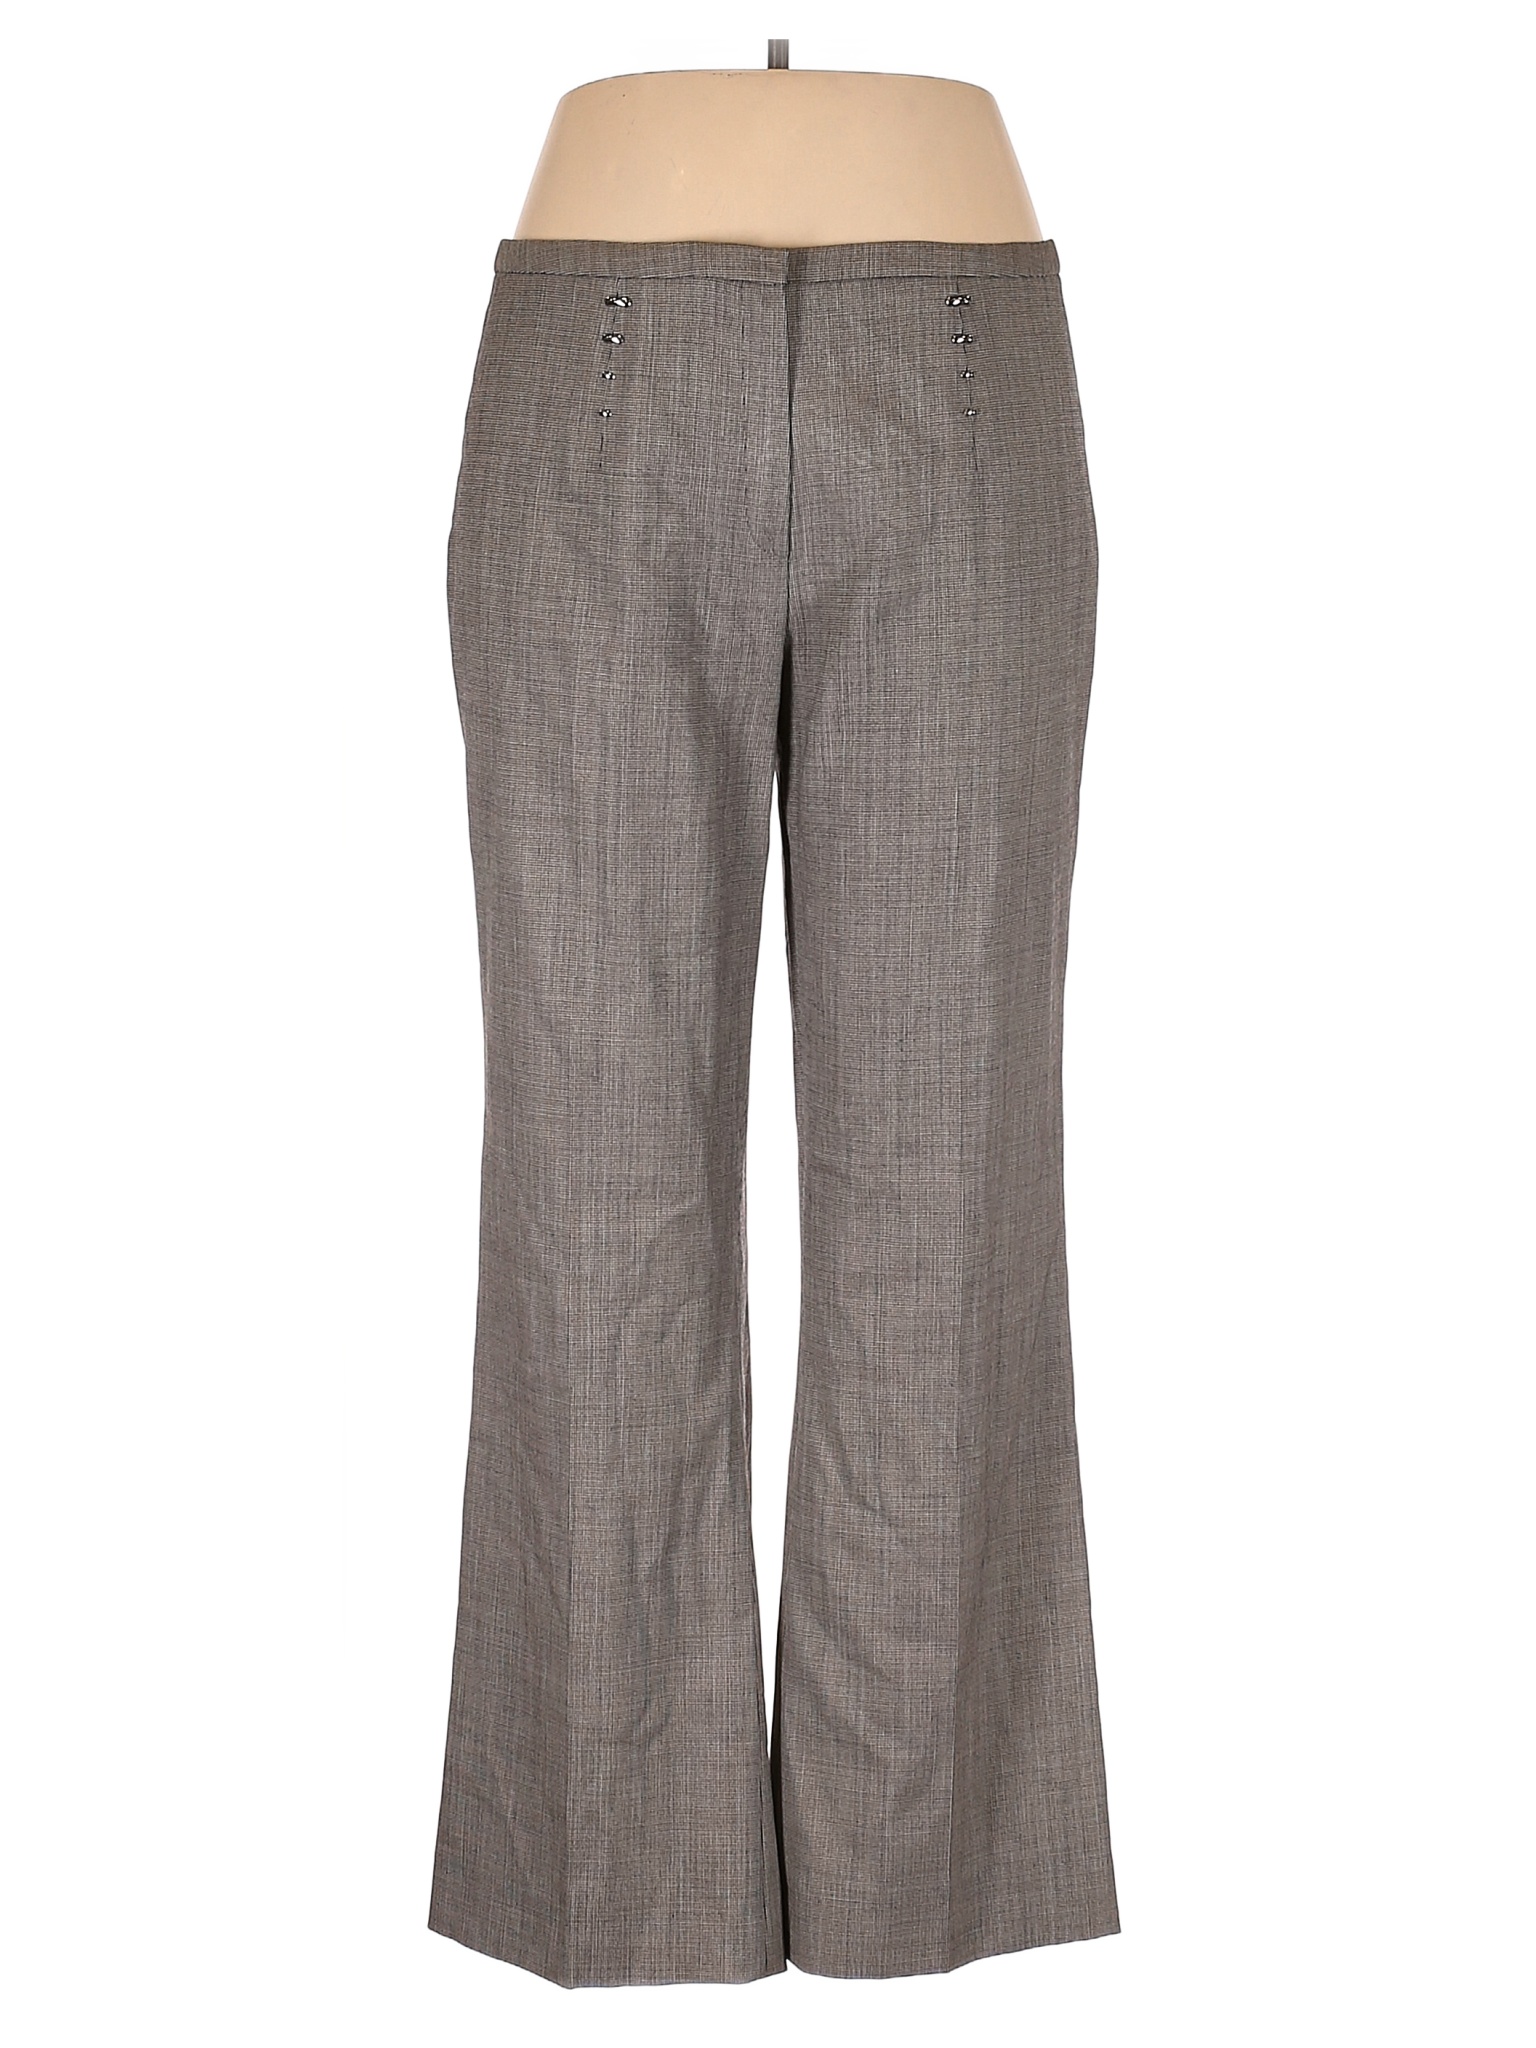 Escada Gray Wool Pants Size 40 (EU) - 94% off | thredUP